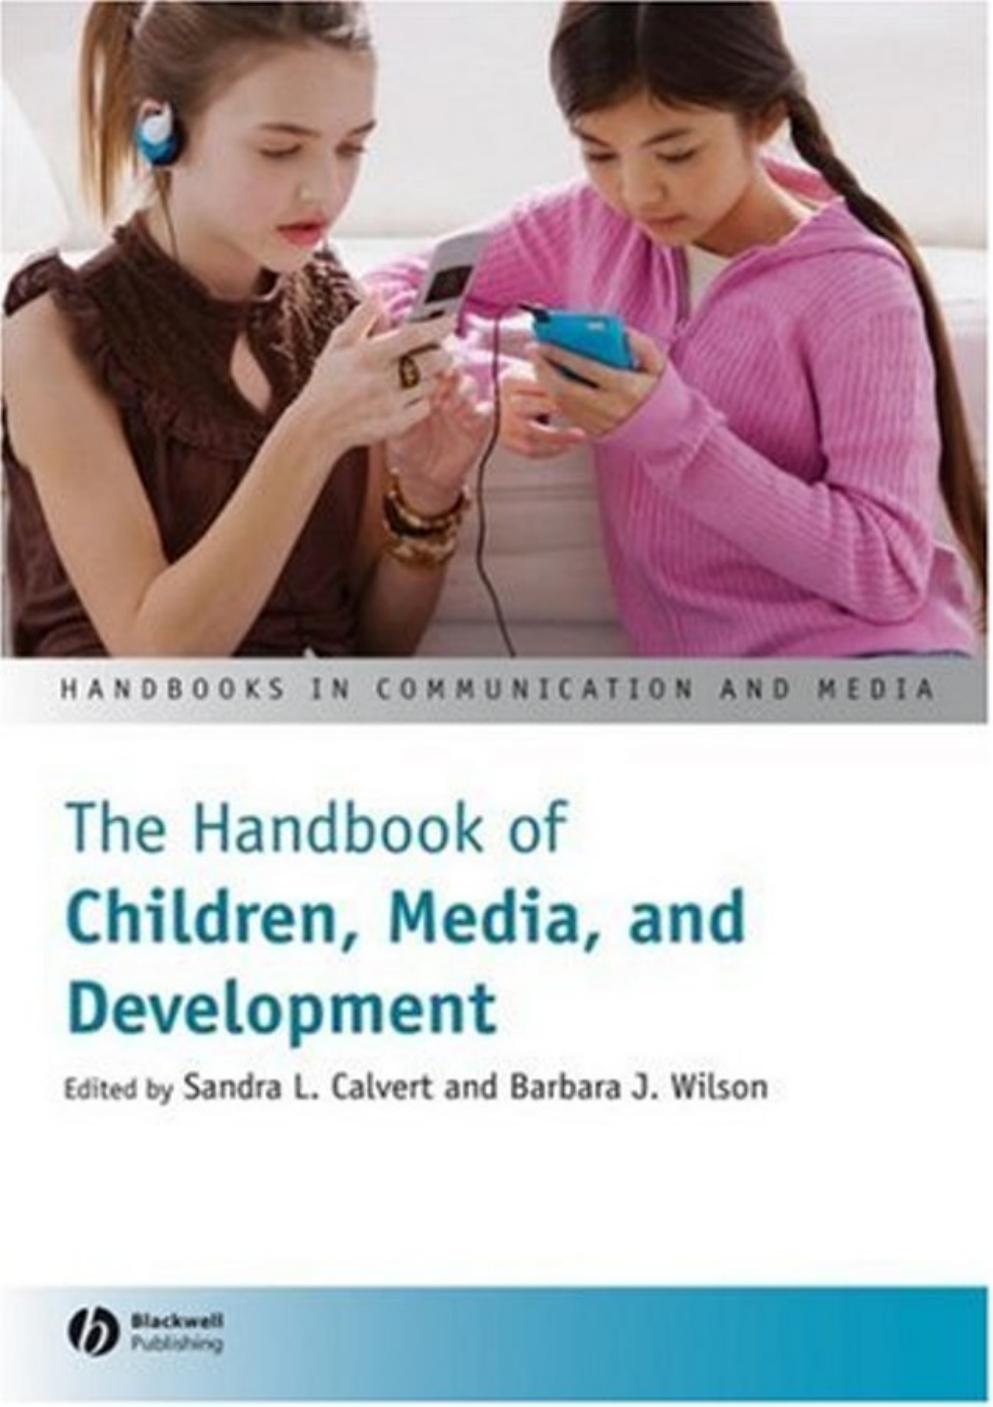 [Sandra L. Calvert, Barbara J. Wilson] The Handboo2008